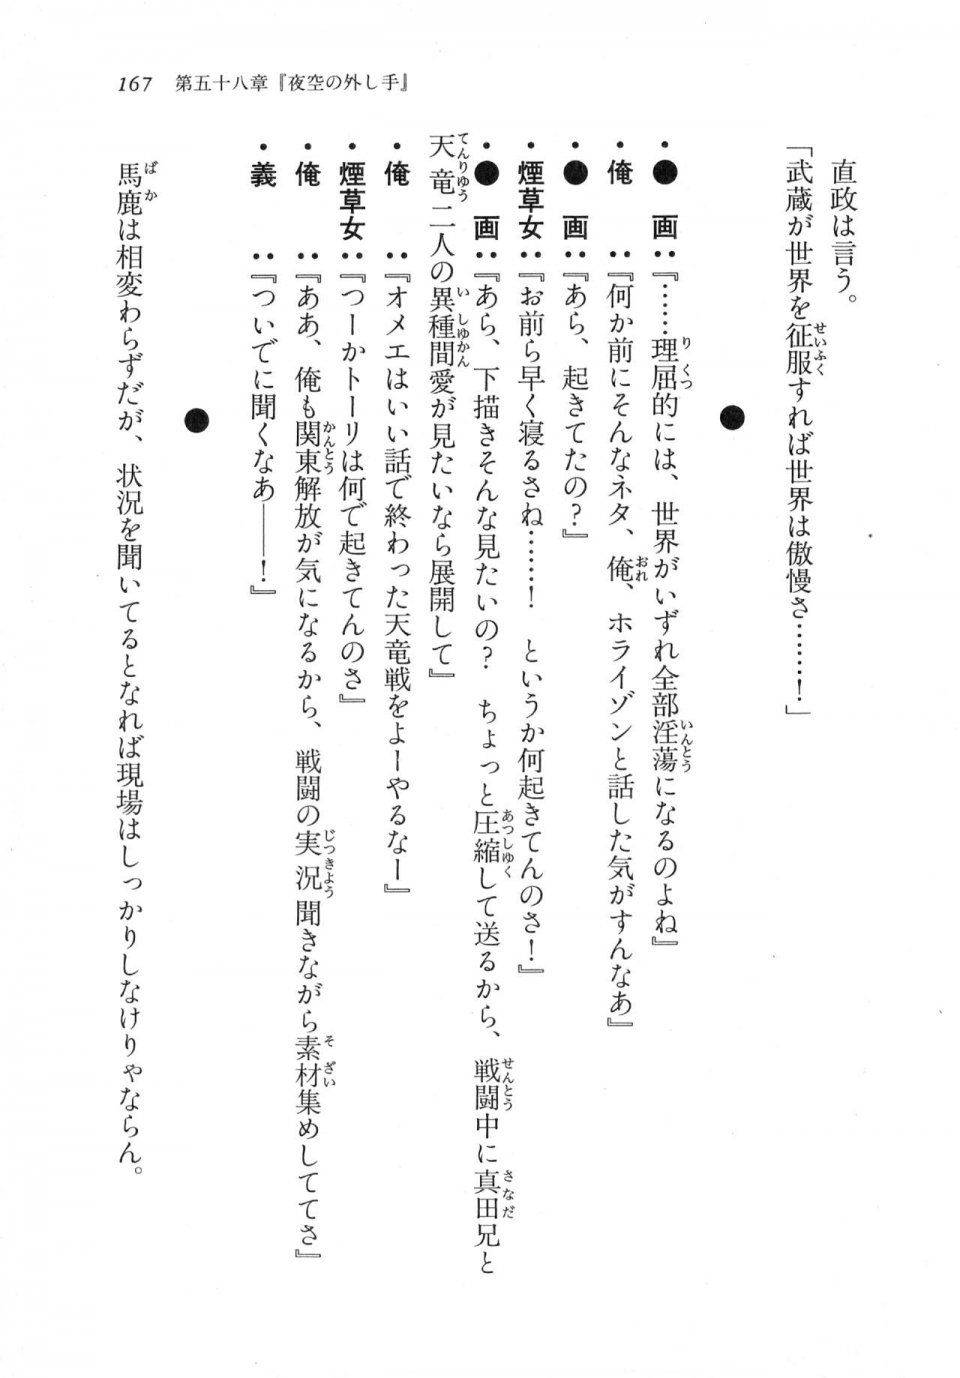 Kyoukai Senjou no Horizon LN Vol 18(7C) Part 1 - Photo #167